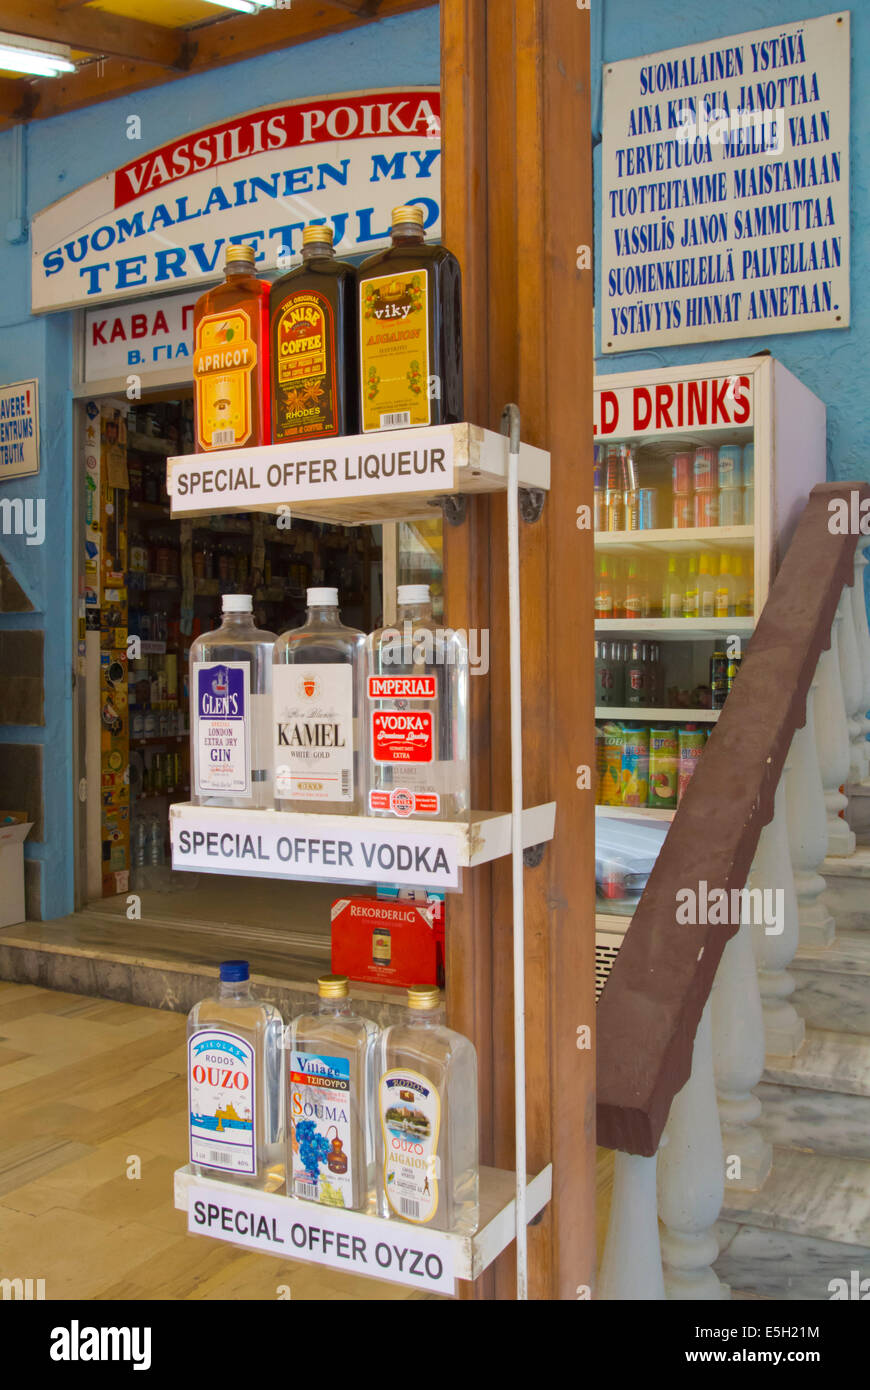 Alcohol spirits liquor, Finnish shop, Rhodes new town, Rhodes island, Dodecanese islands, South Aegean region, Greece, Europe Stock Photo